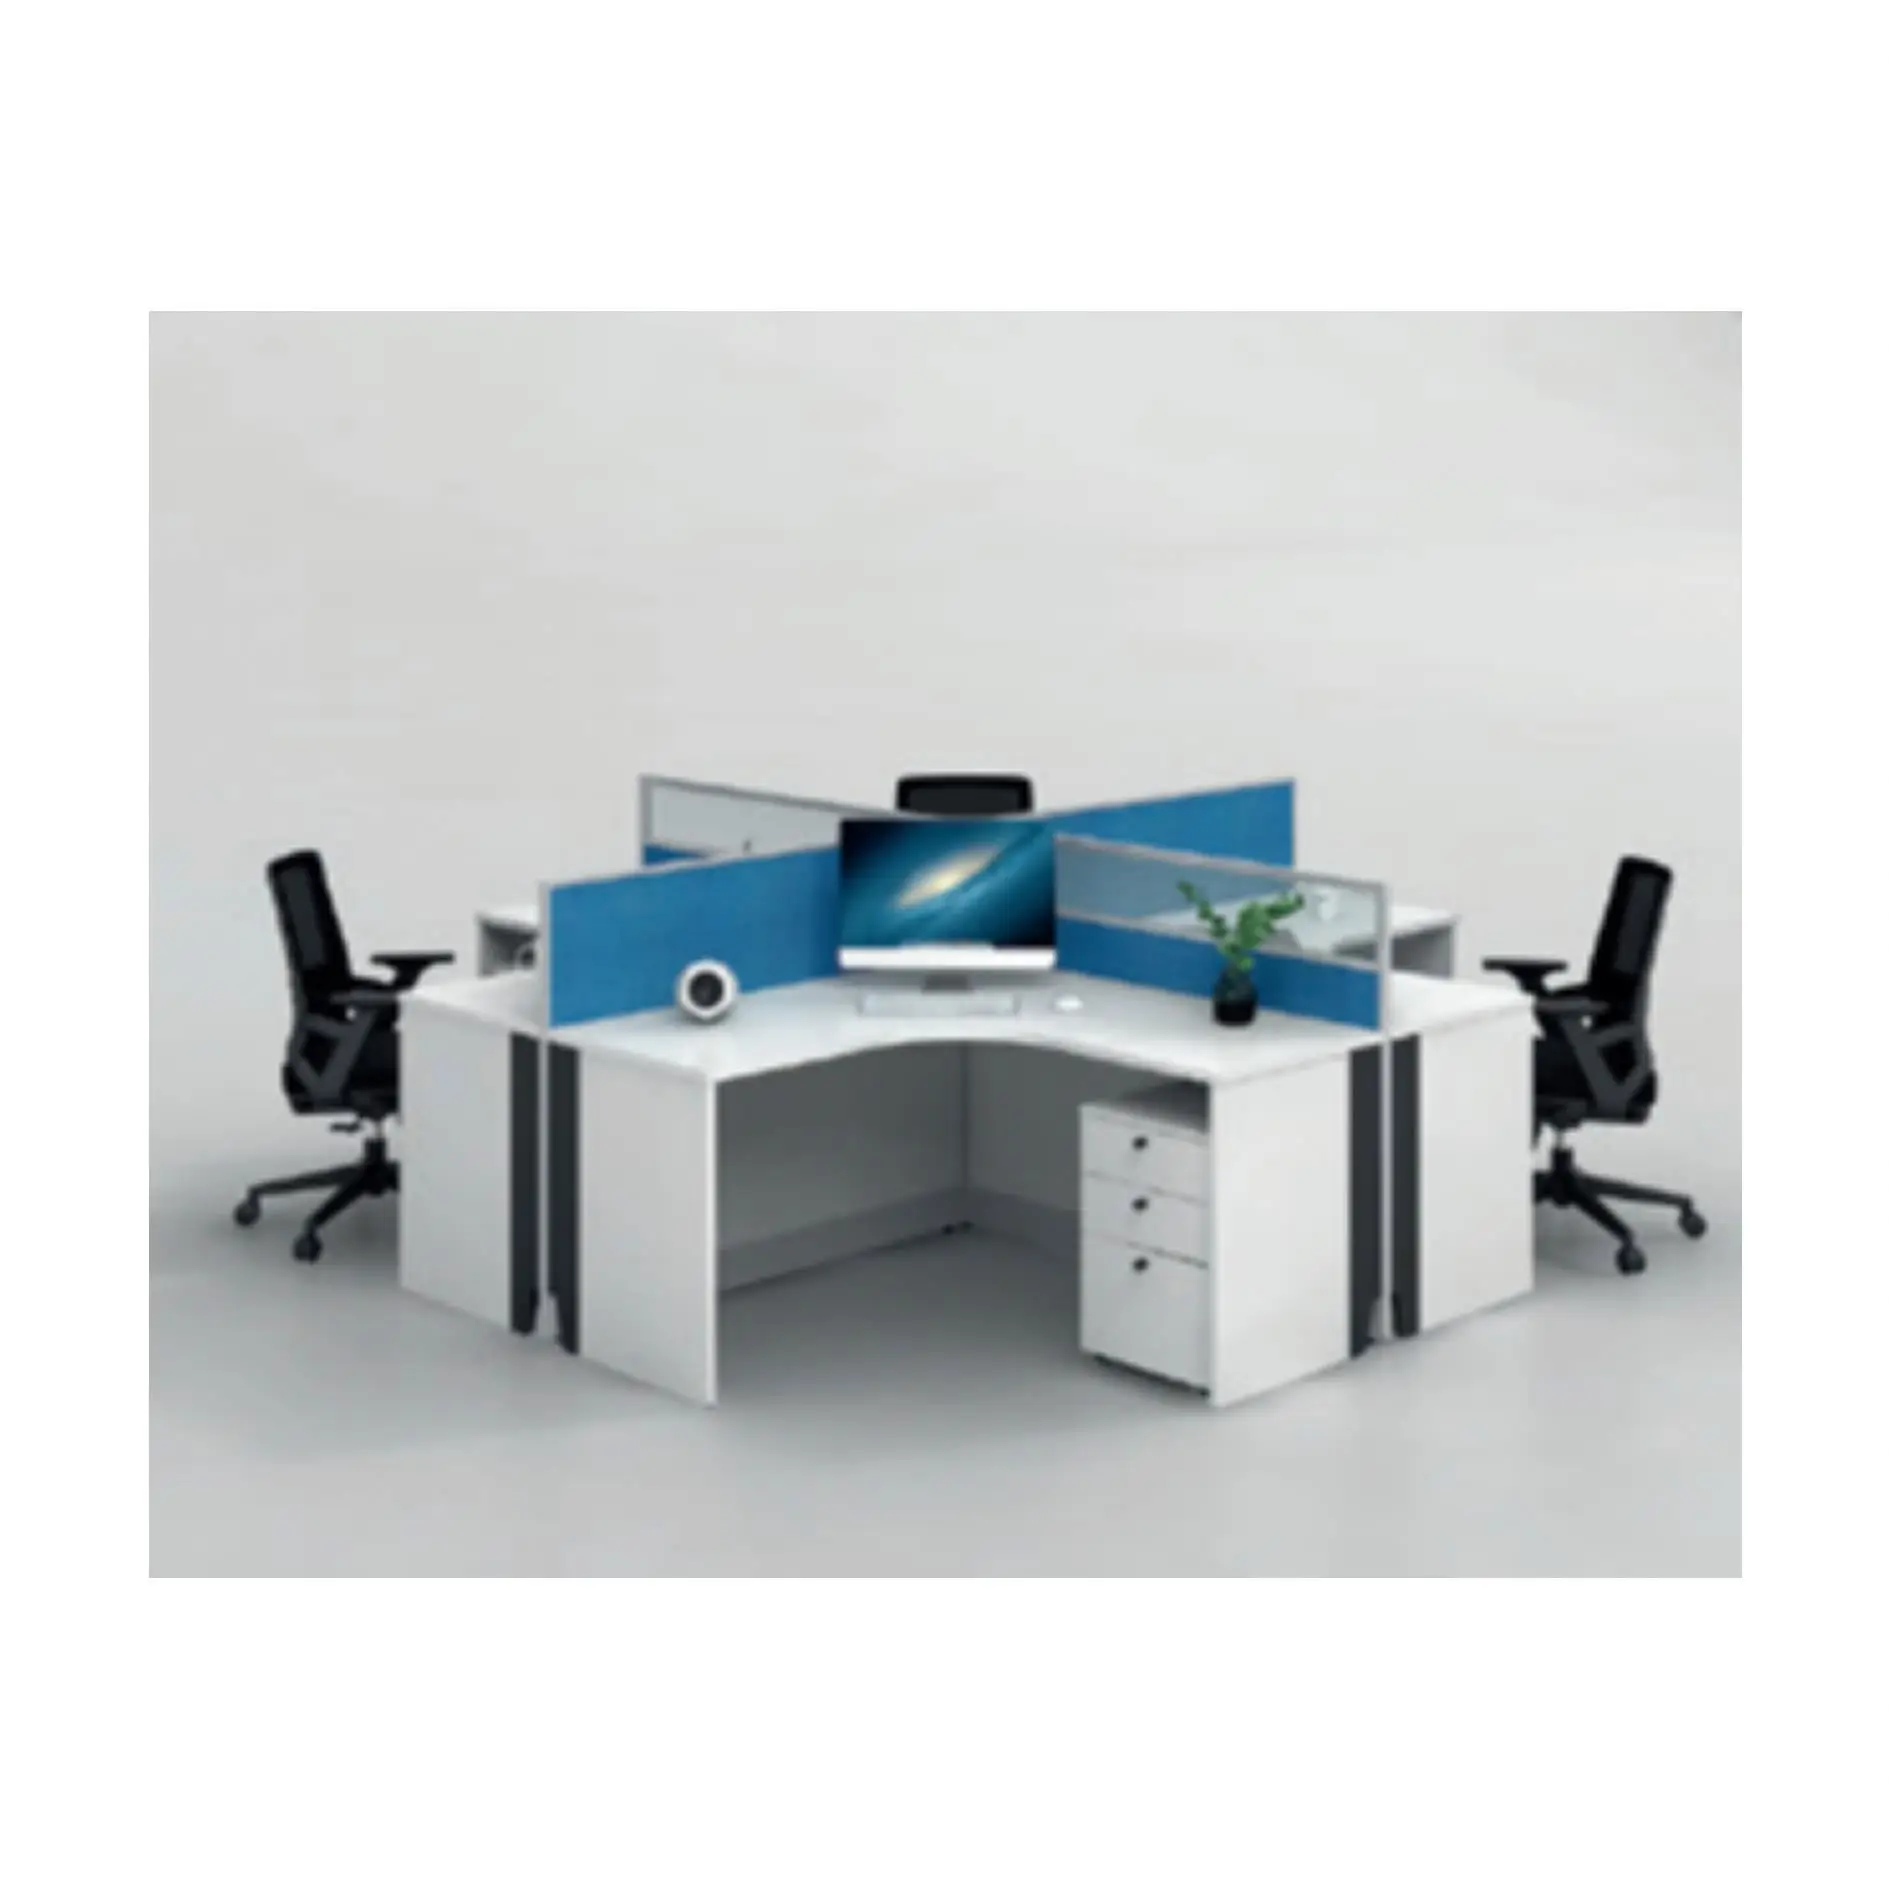 Aluminum Office Desk Flash Sales, 56% OFF | www.pegasusaerogroup.com